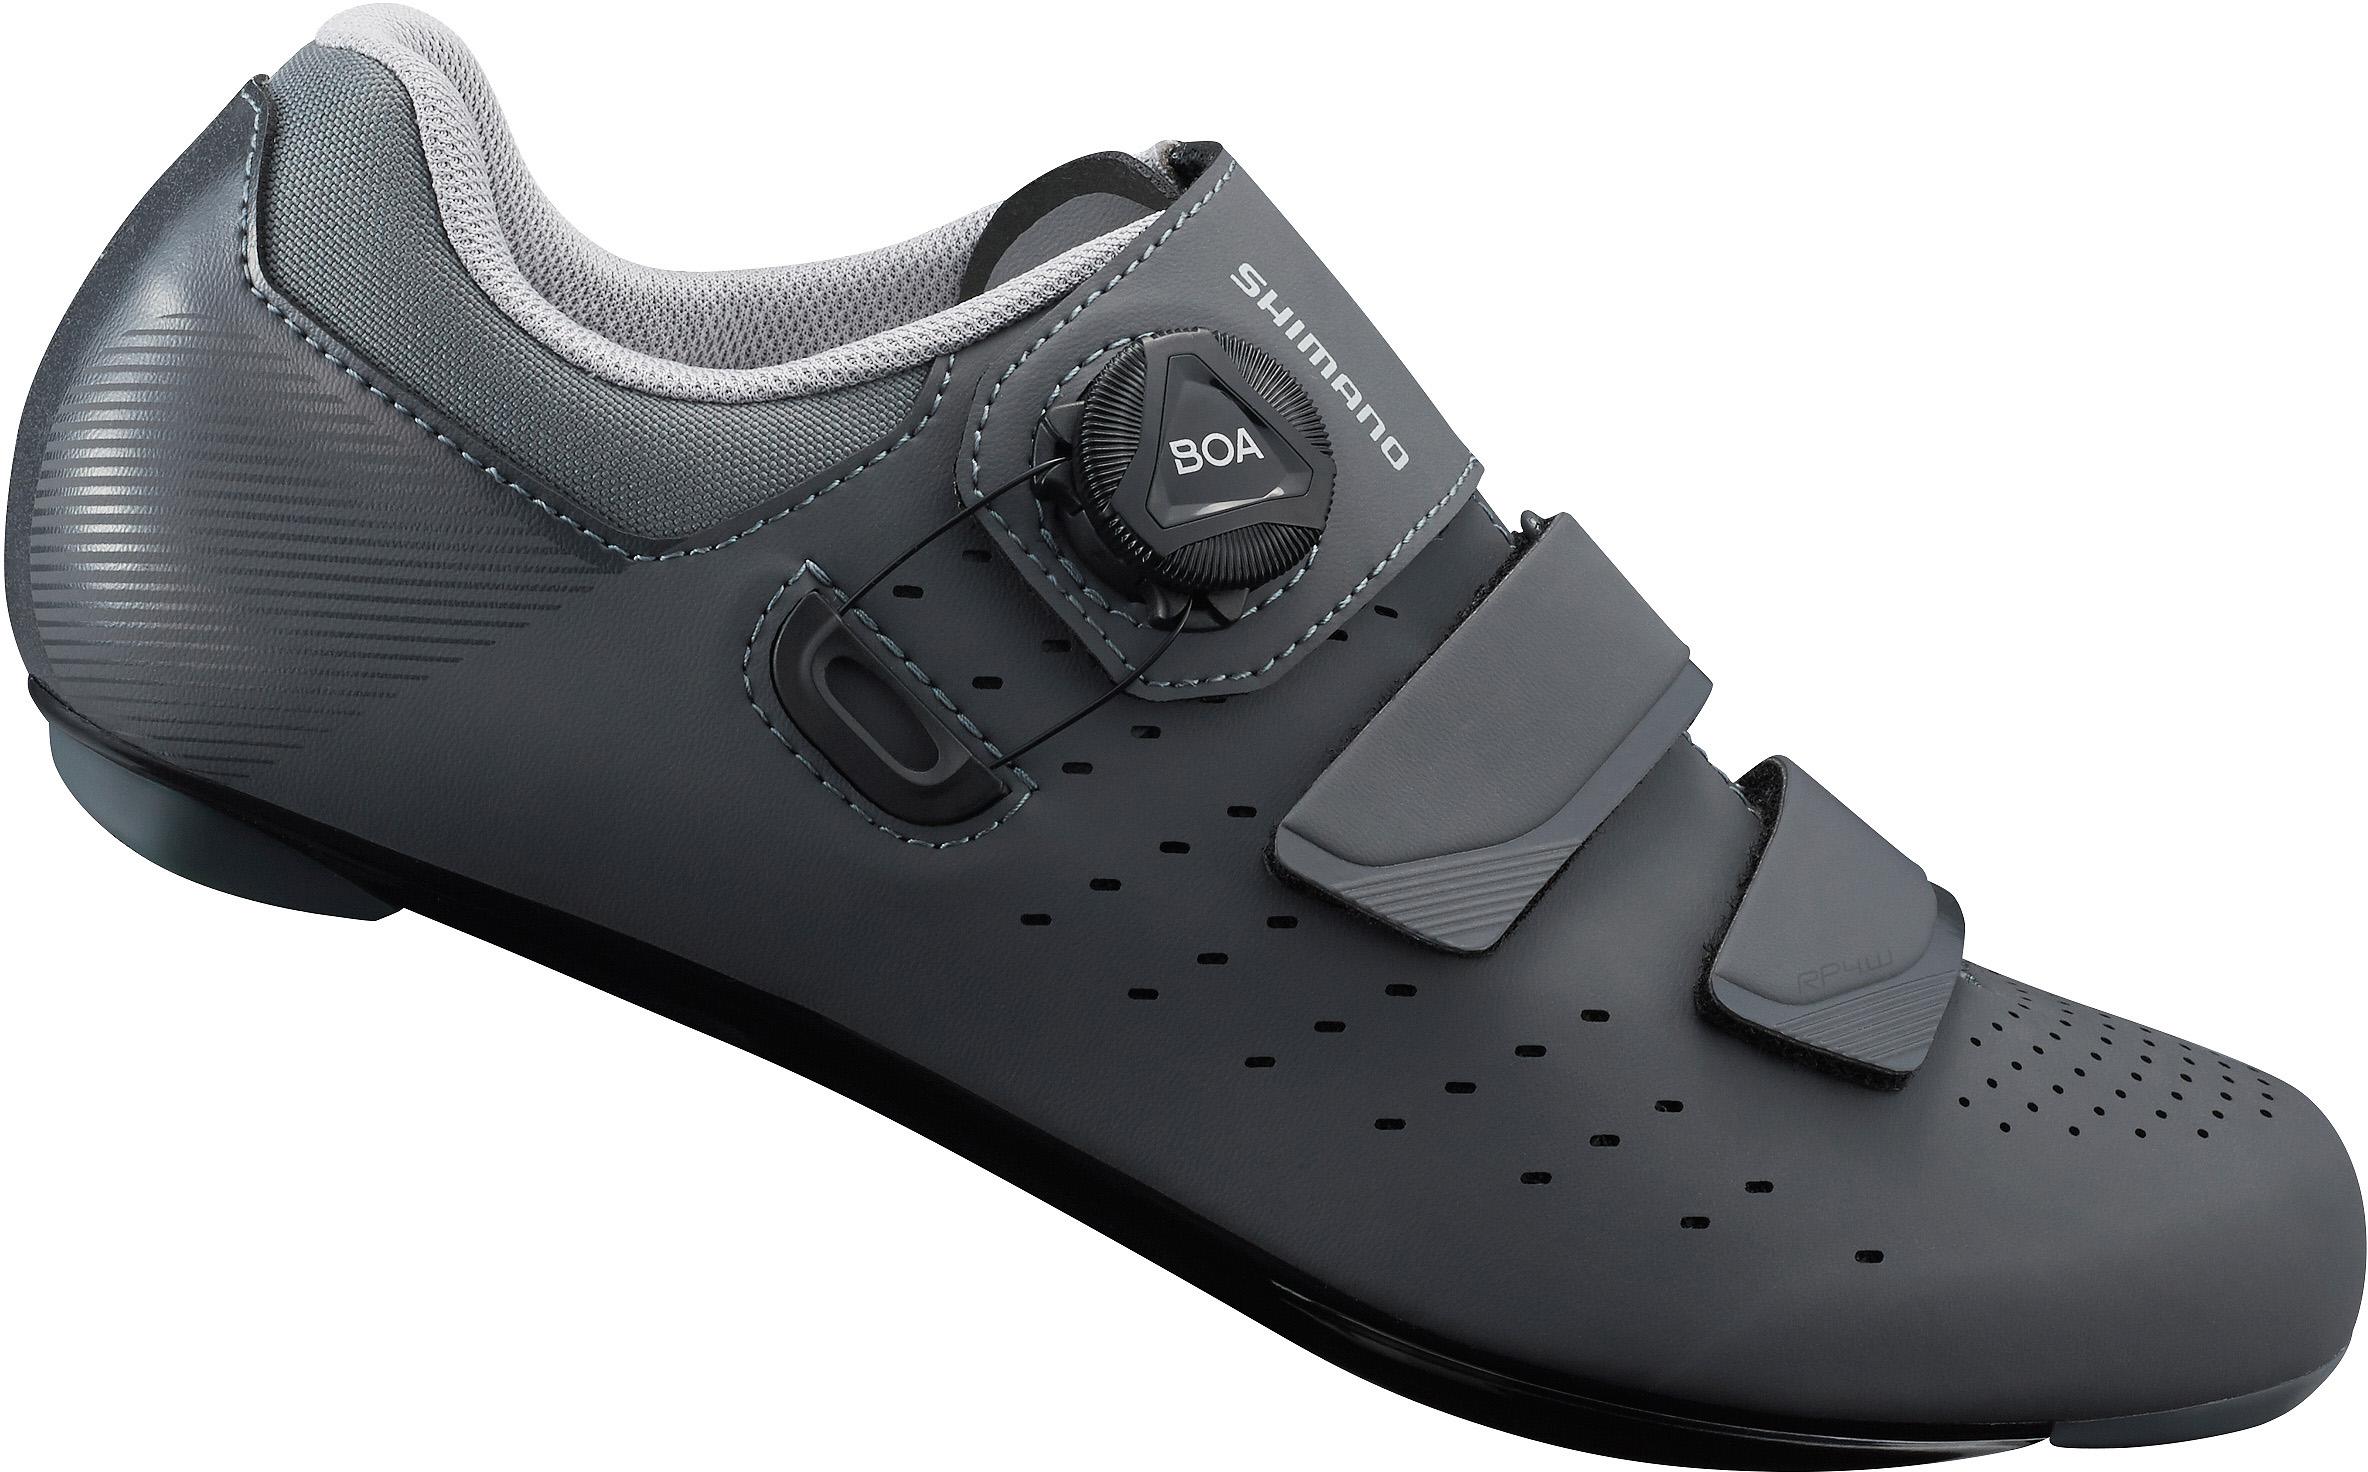 Rp4W Spd-Sl Shoes, Grey, Size 38